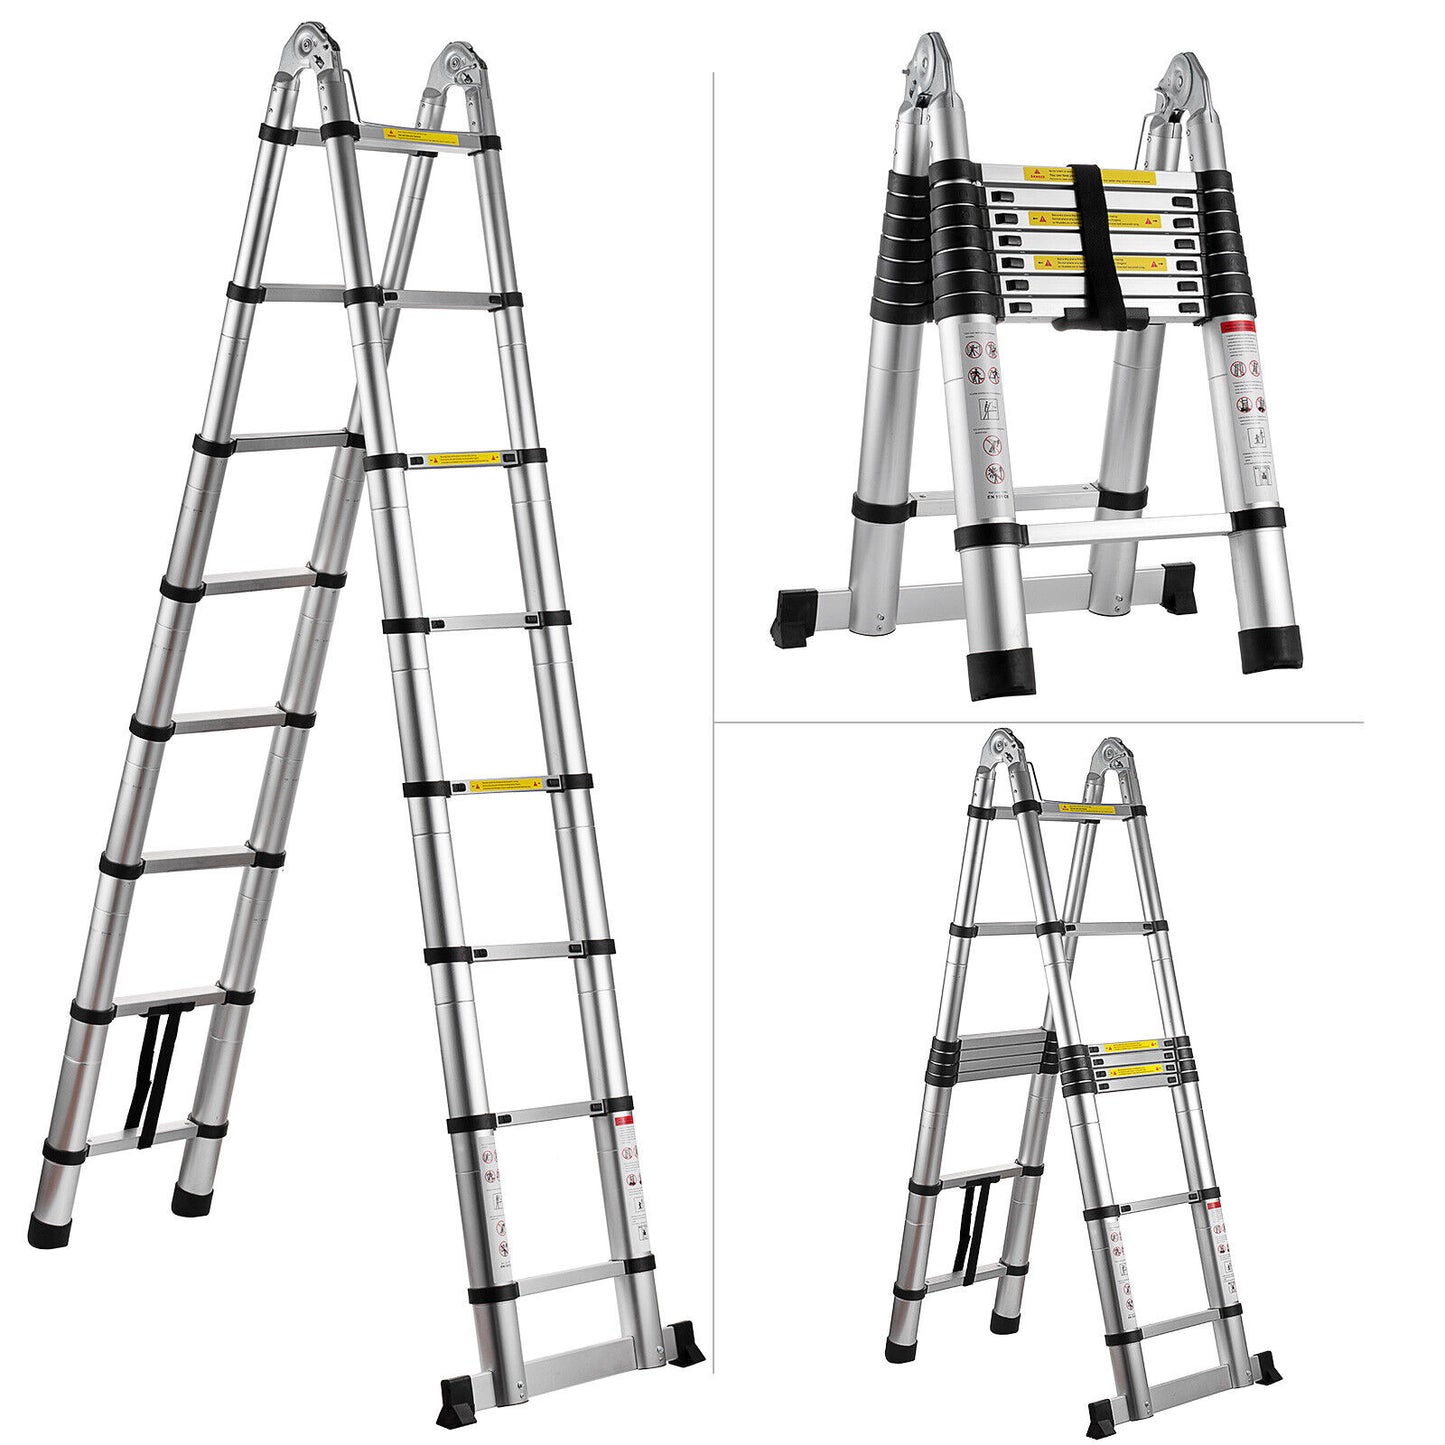 16.5FT Aluminum Telescopic Ladder Multi-Purpose Folding Extension 330LBS Load